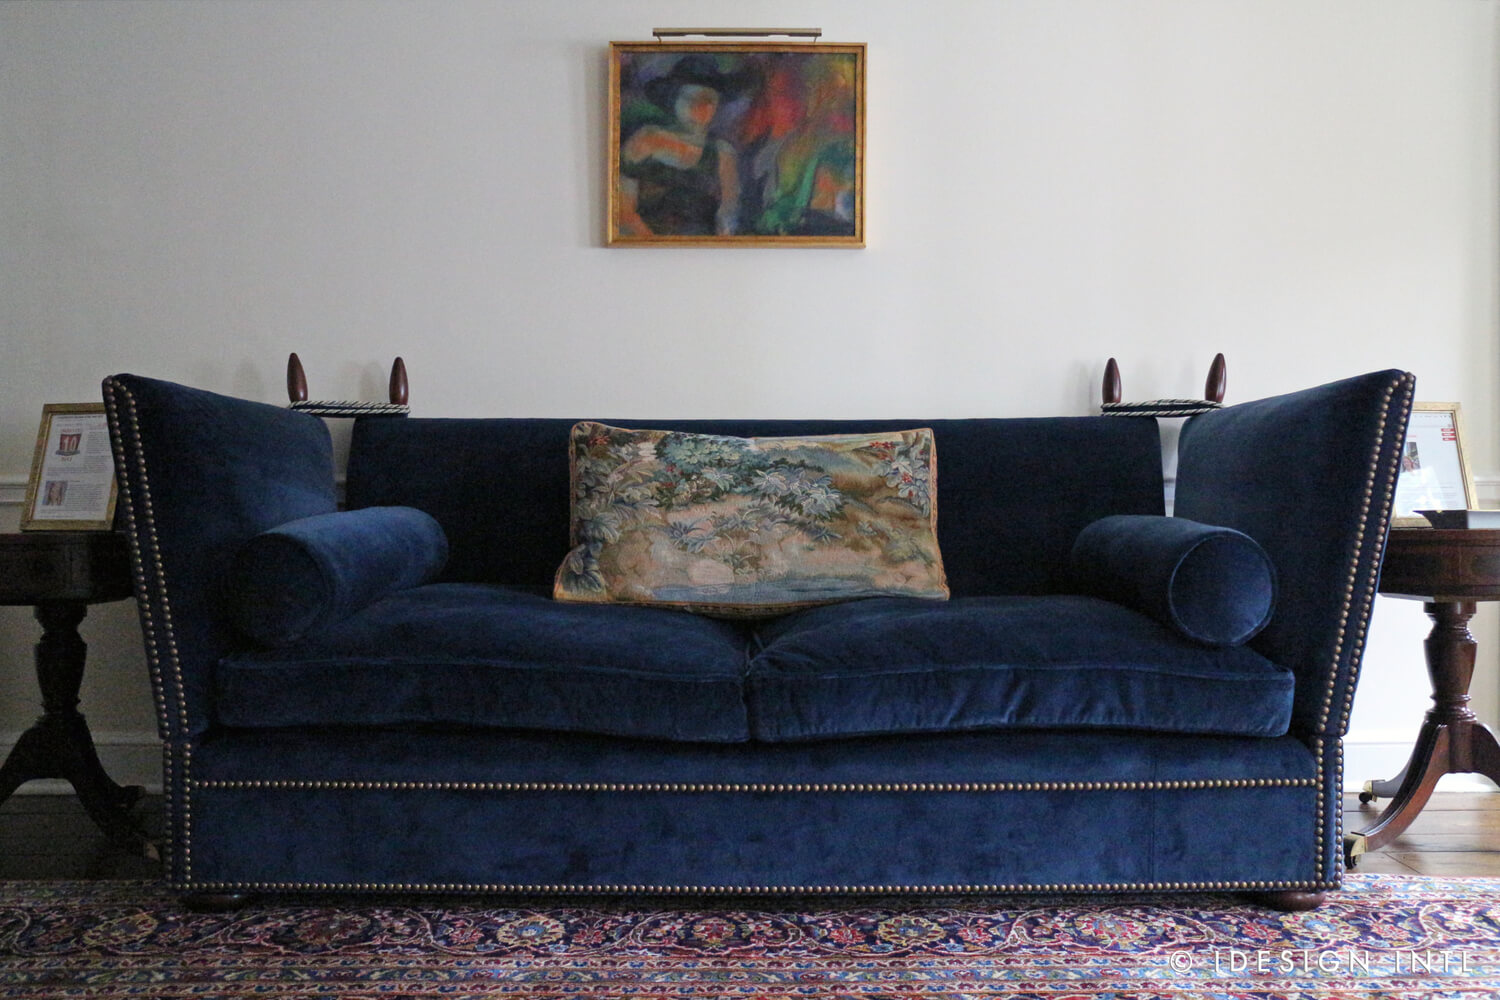 Best Sofa Styles